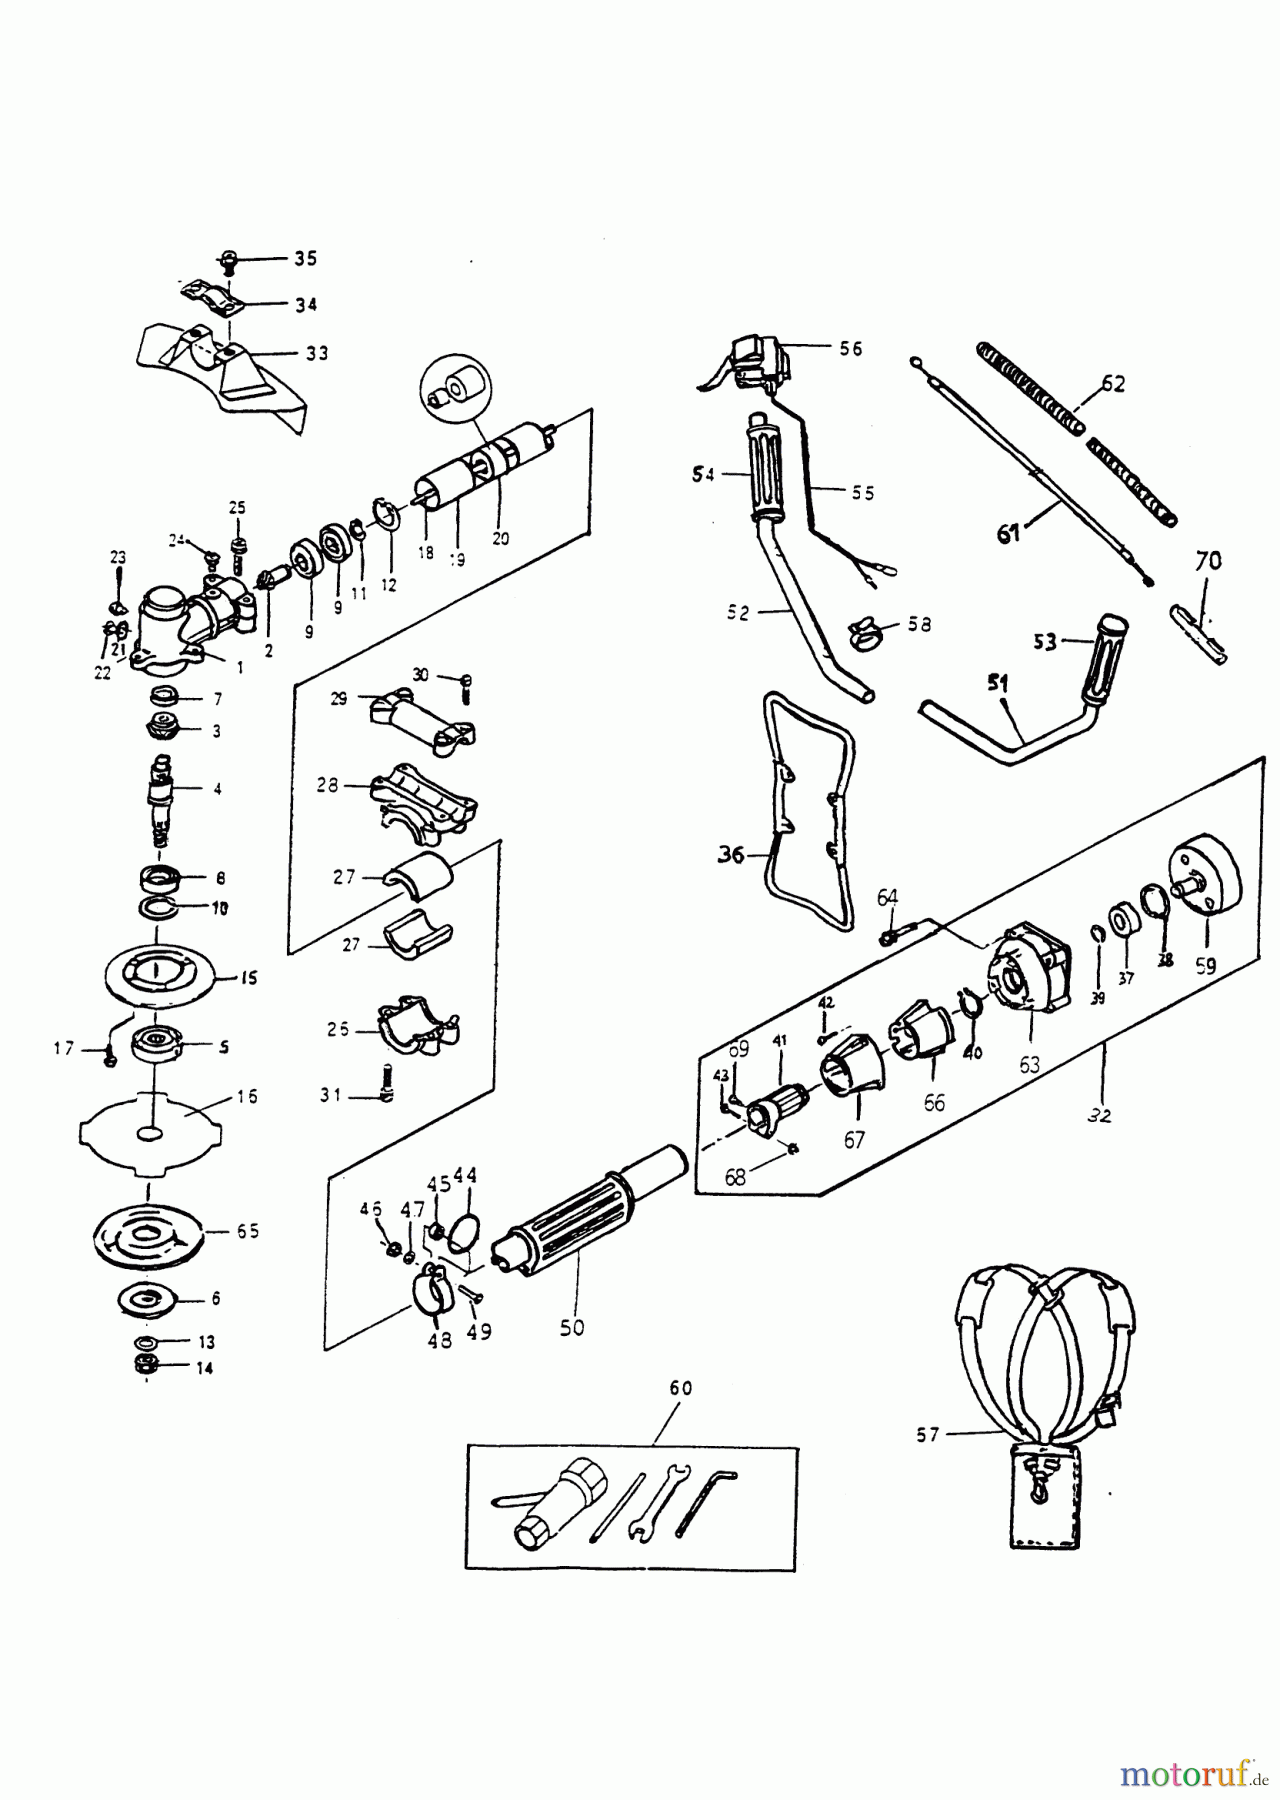  AL-KO Gartentechnik Motorsensen BC 400 T  03/1995 Seite 1